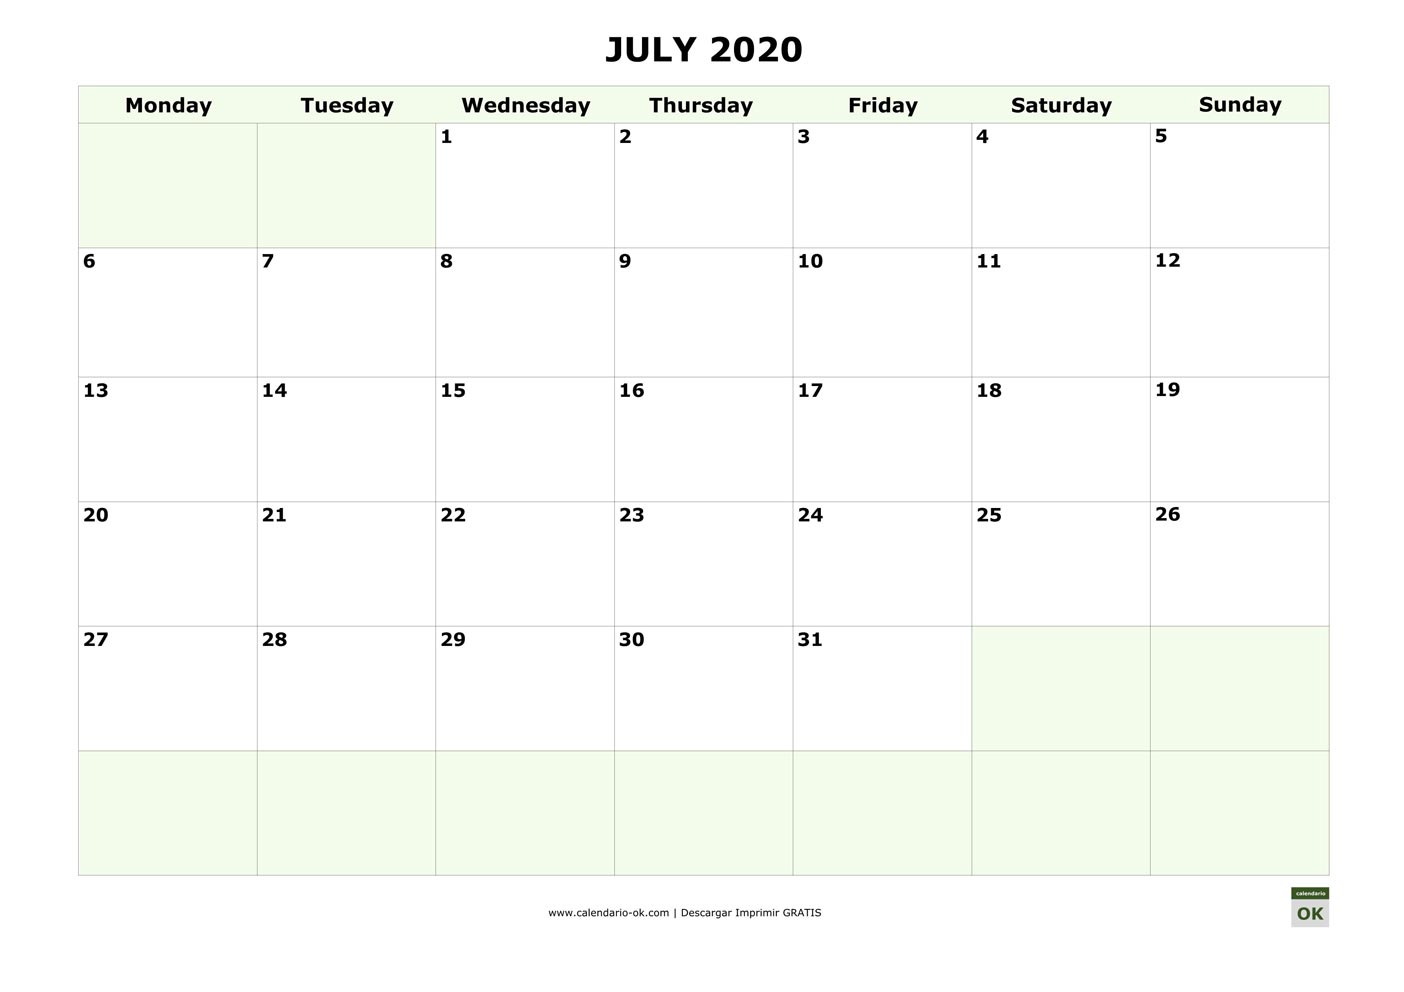 JULIO 2020 calendario en INGLES